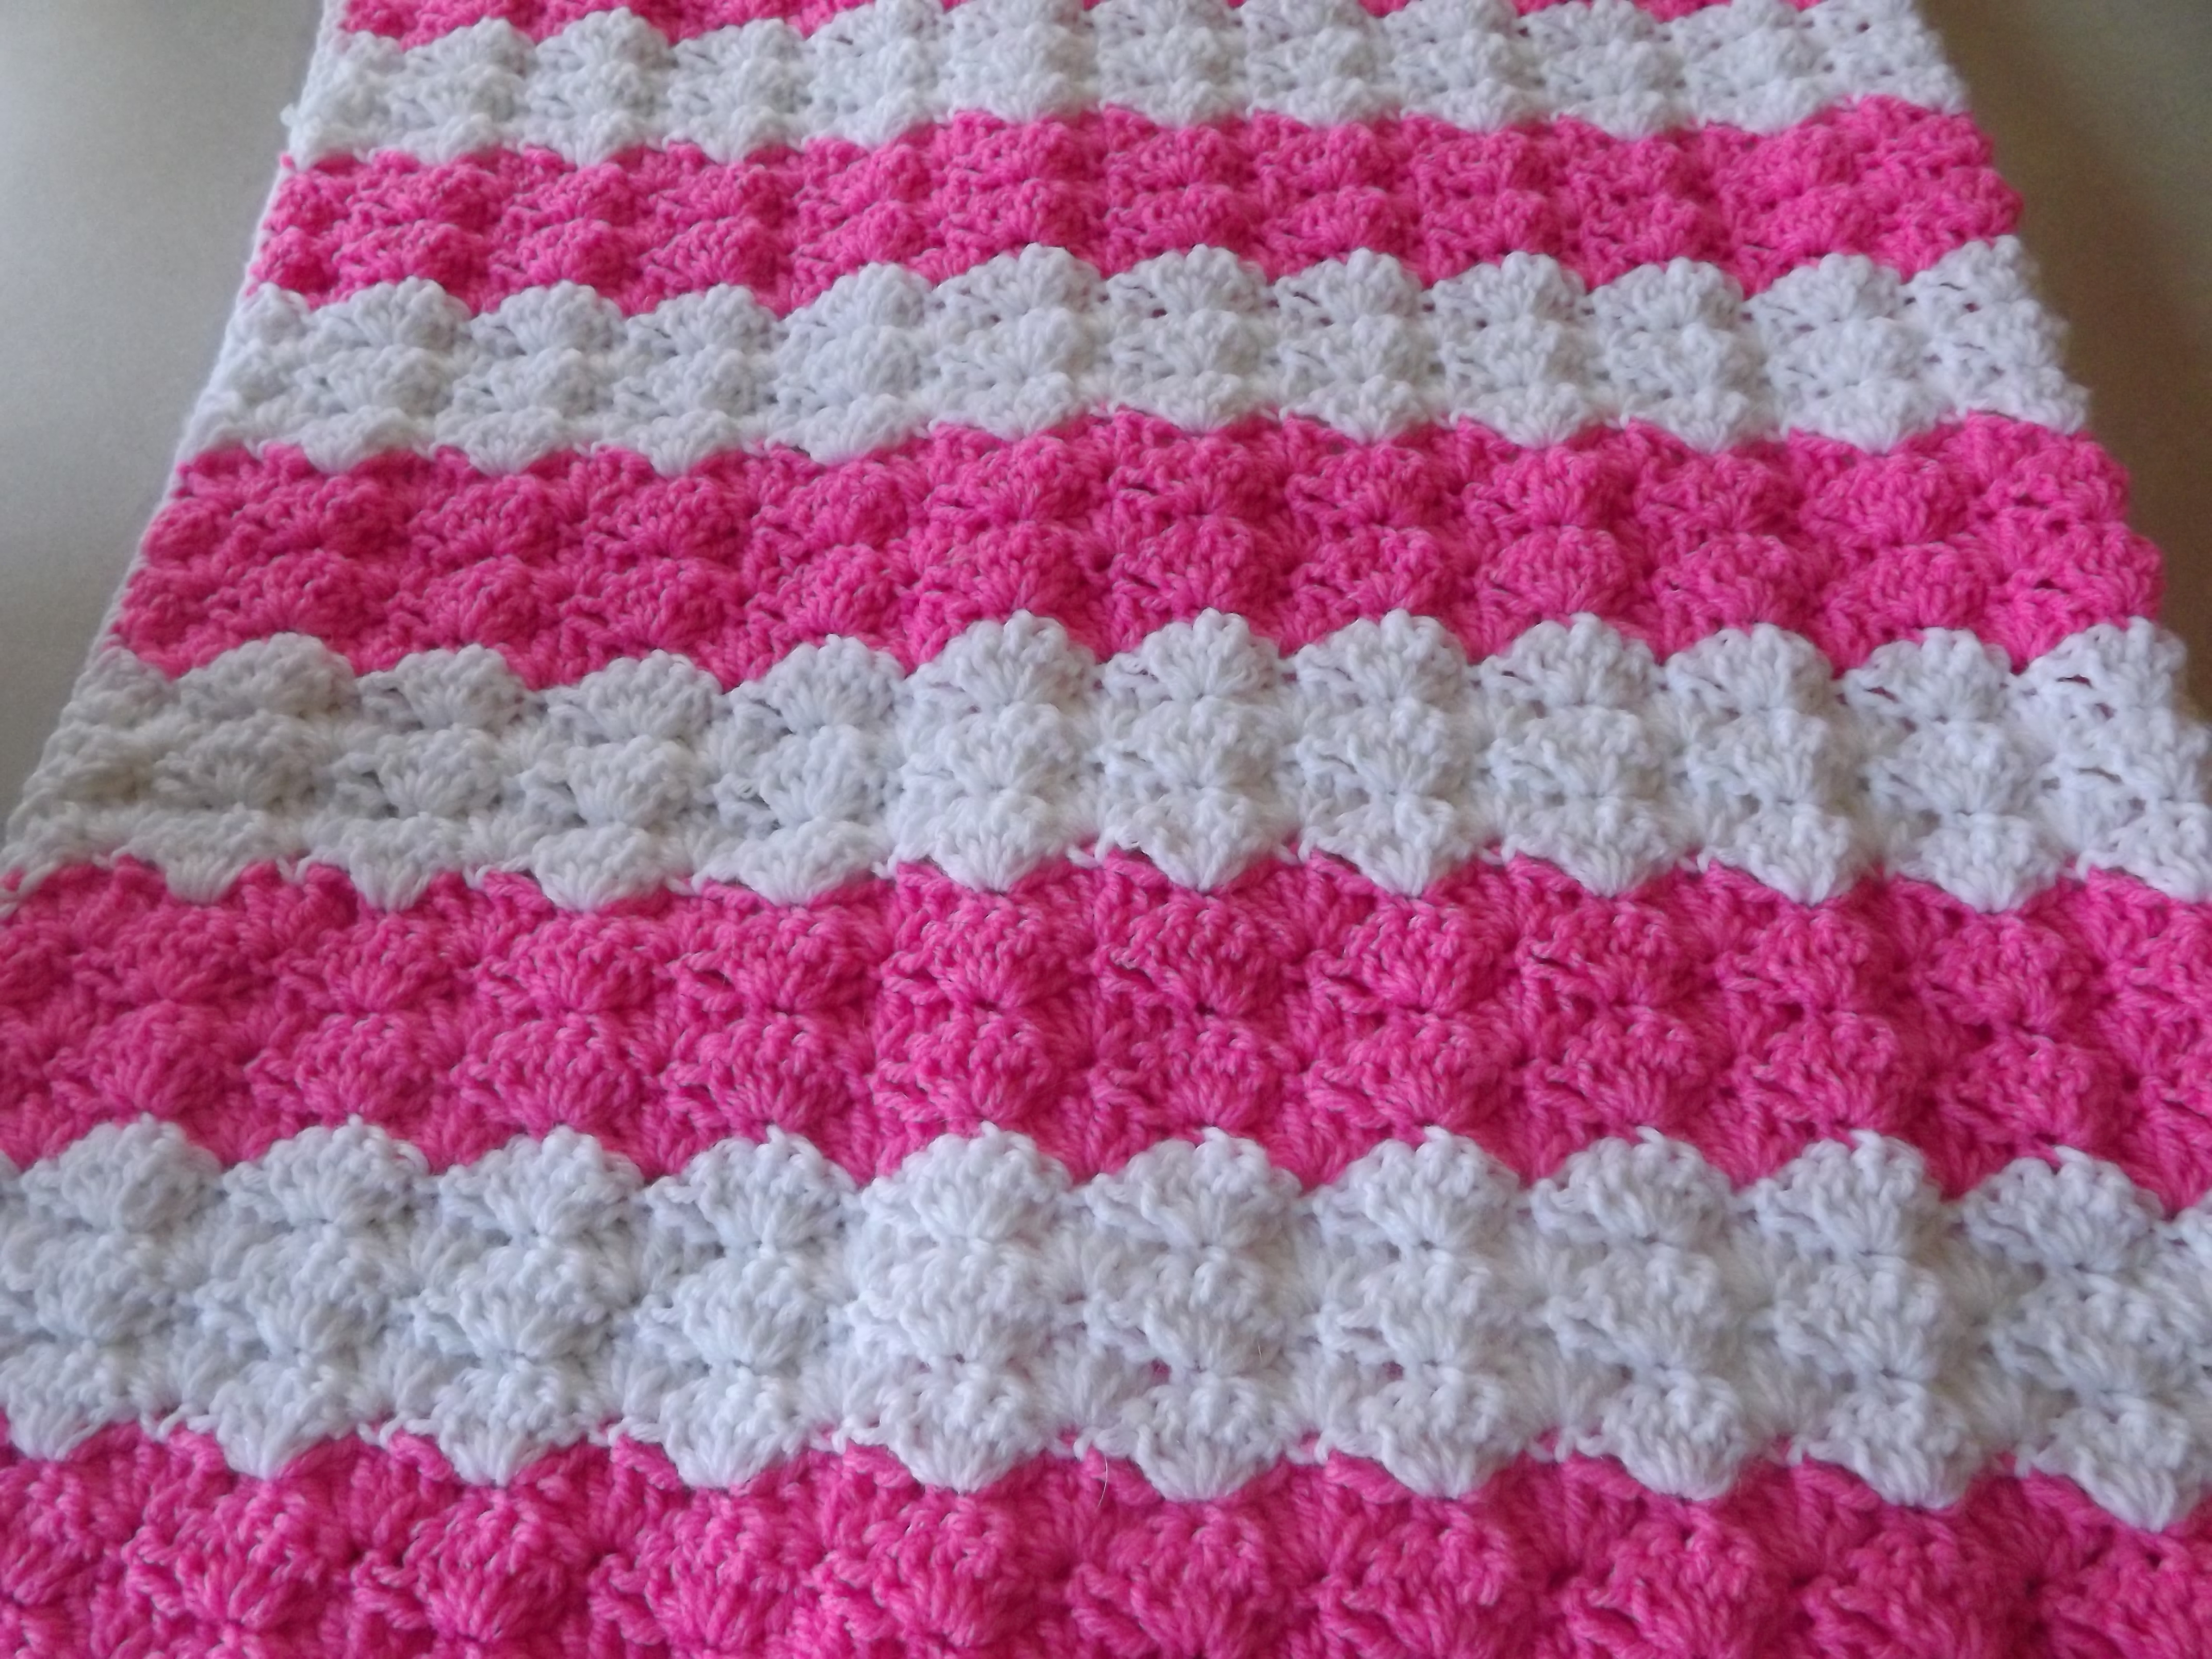 Star Shell Afghan Crochet Pattern Sleep Well With Free Crochet Patterns For Ba Blankets Crochet